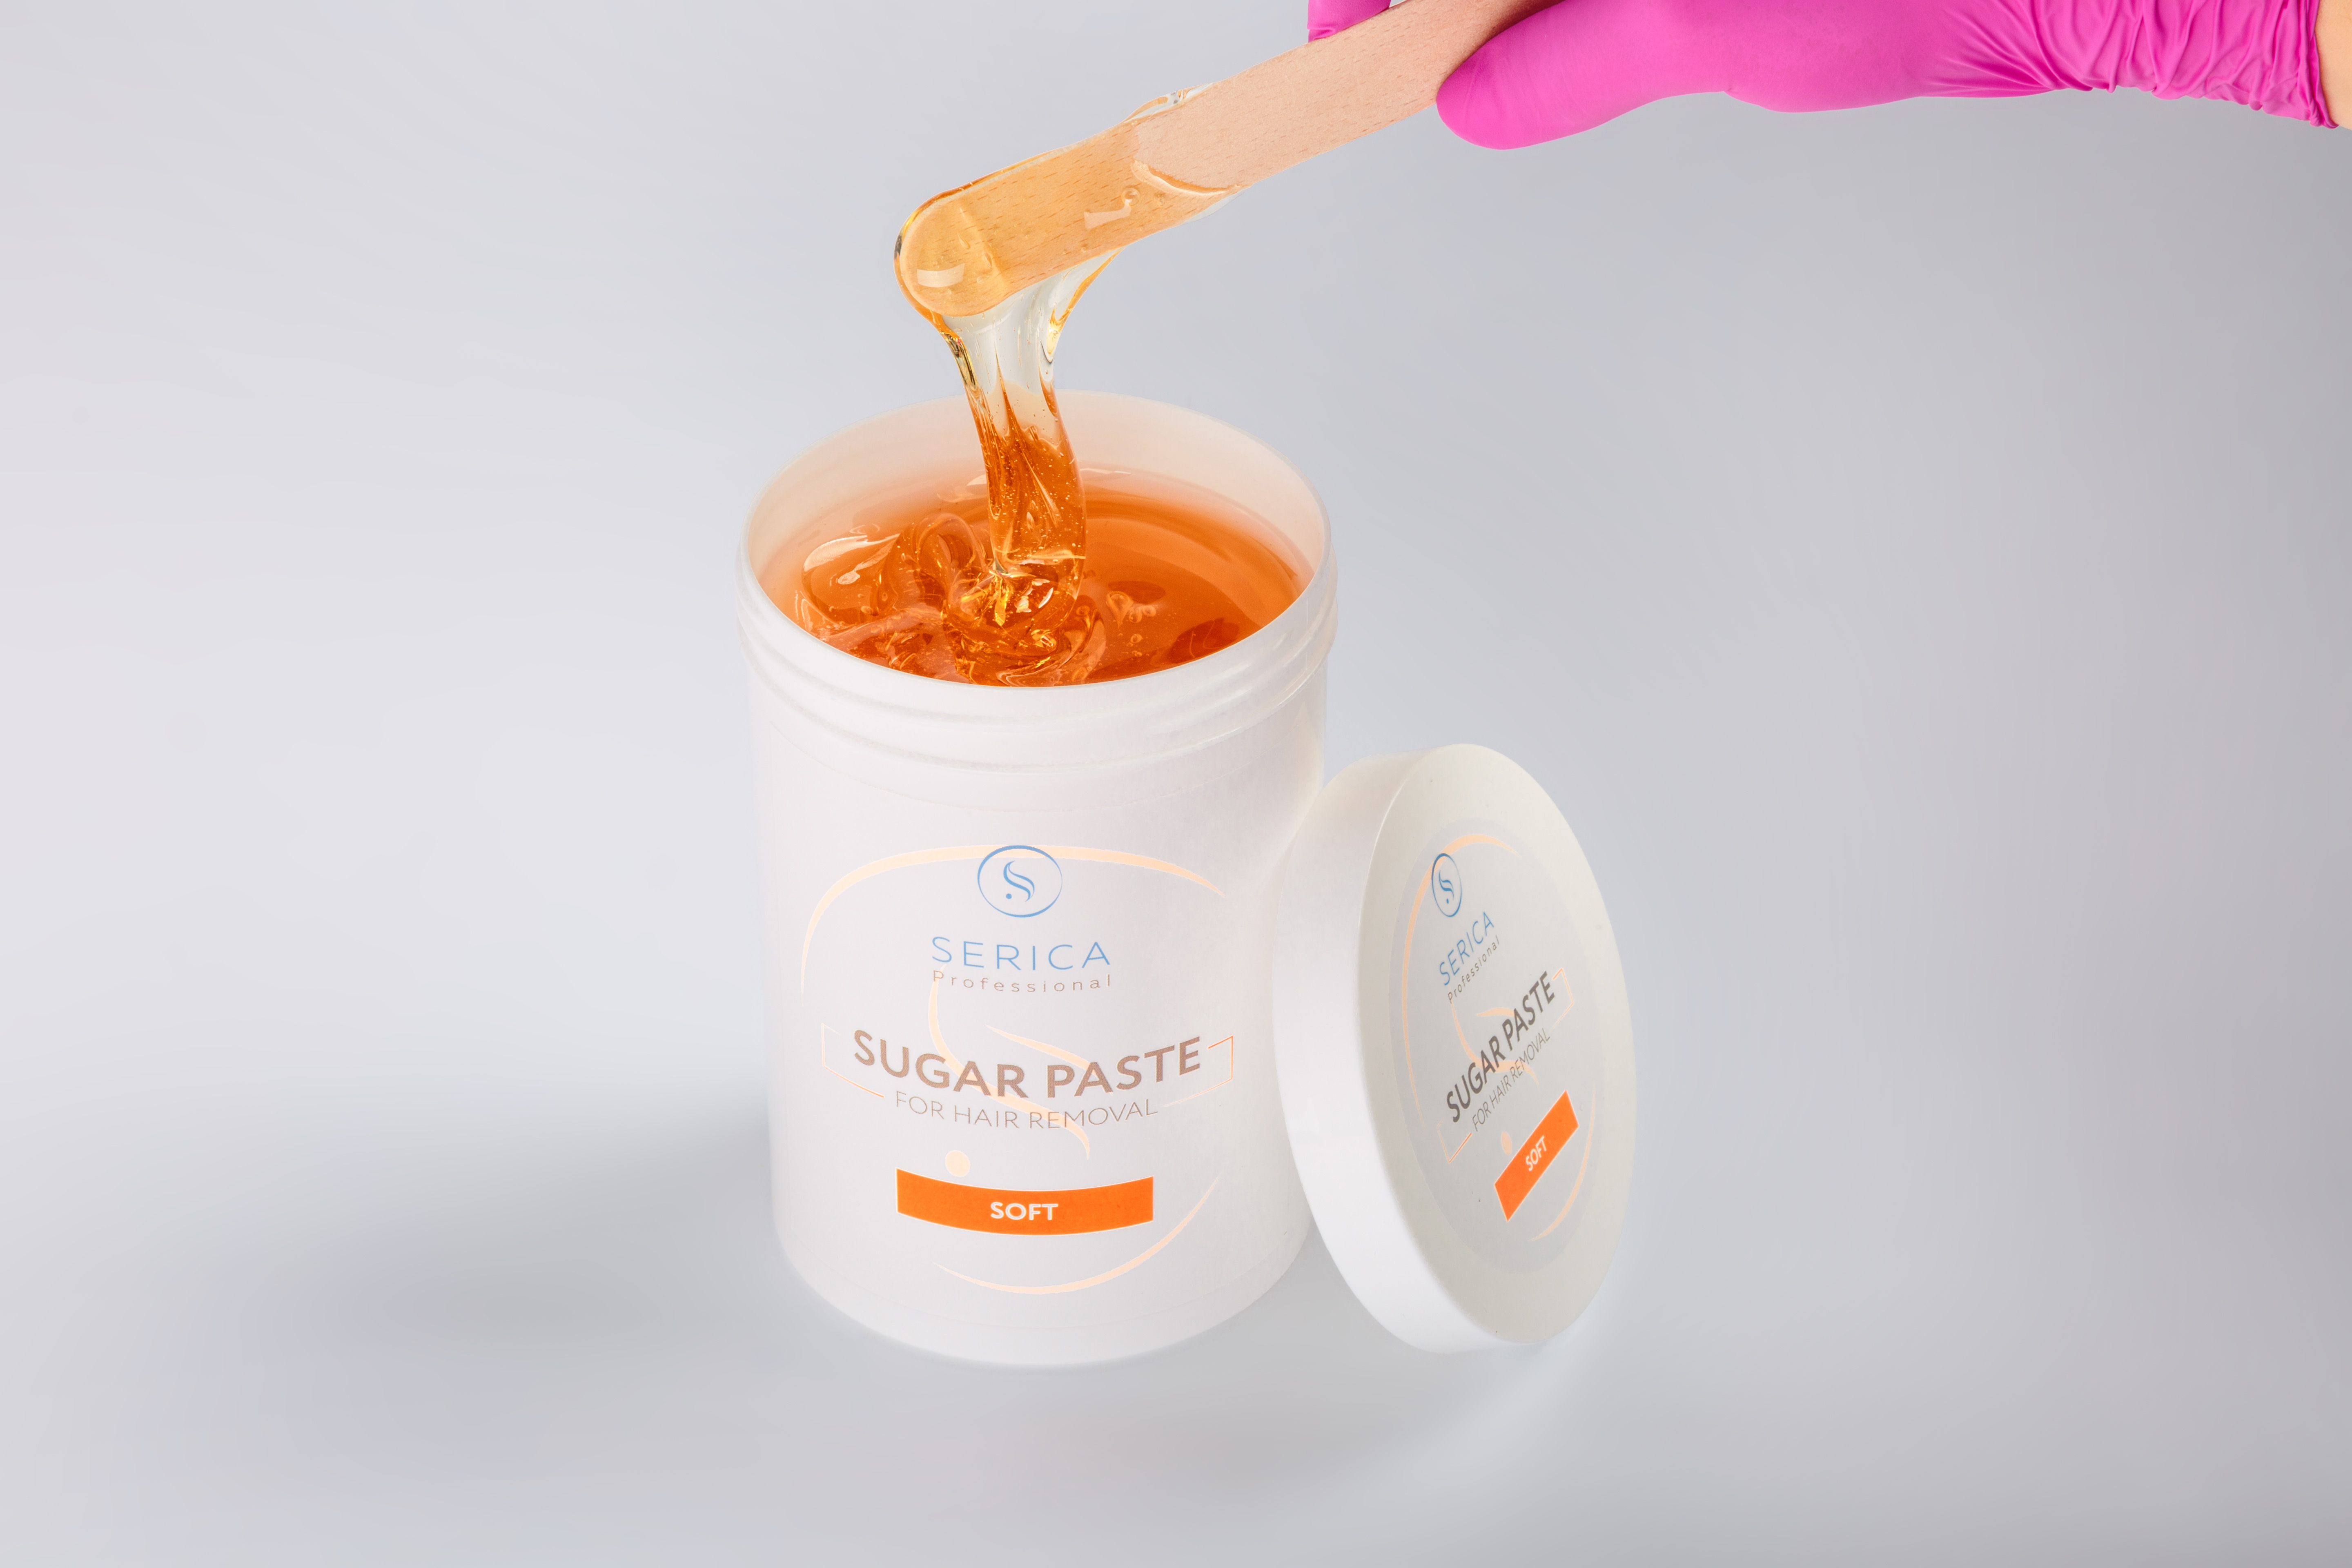 Serica Soft sugar paste for depilation 350 g